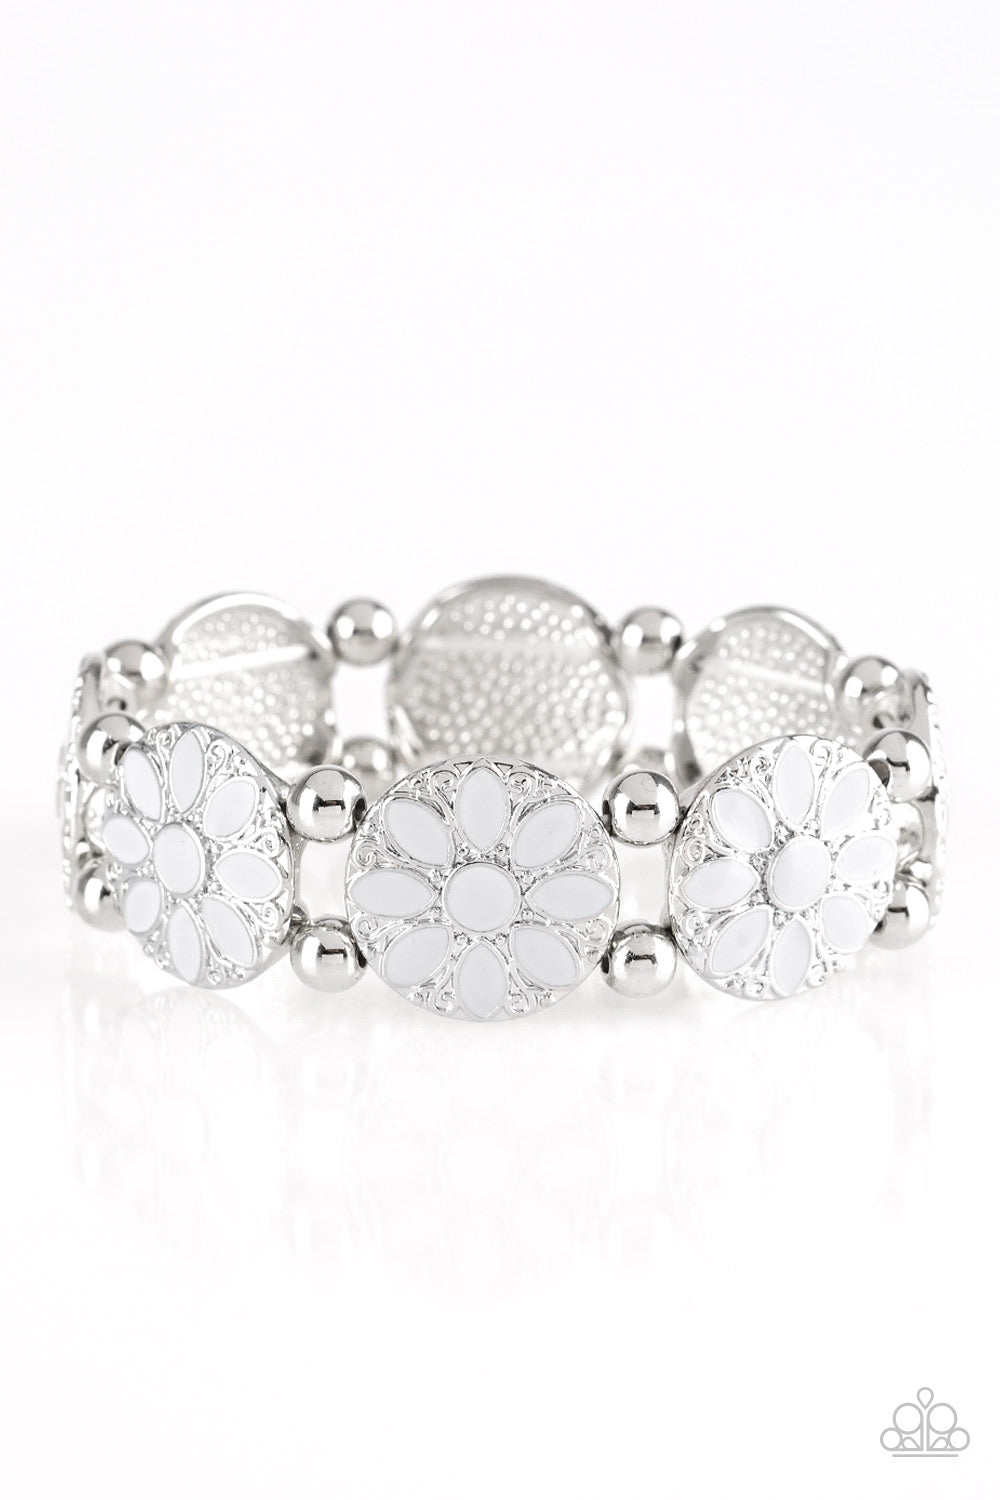 Dancing Dahlias - Silver bracelet 1766